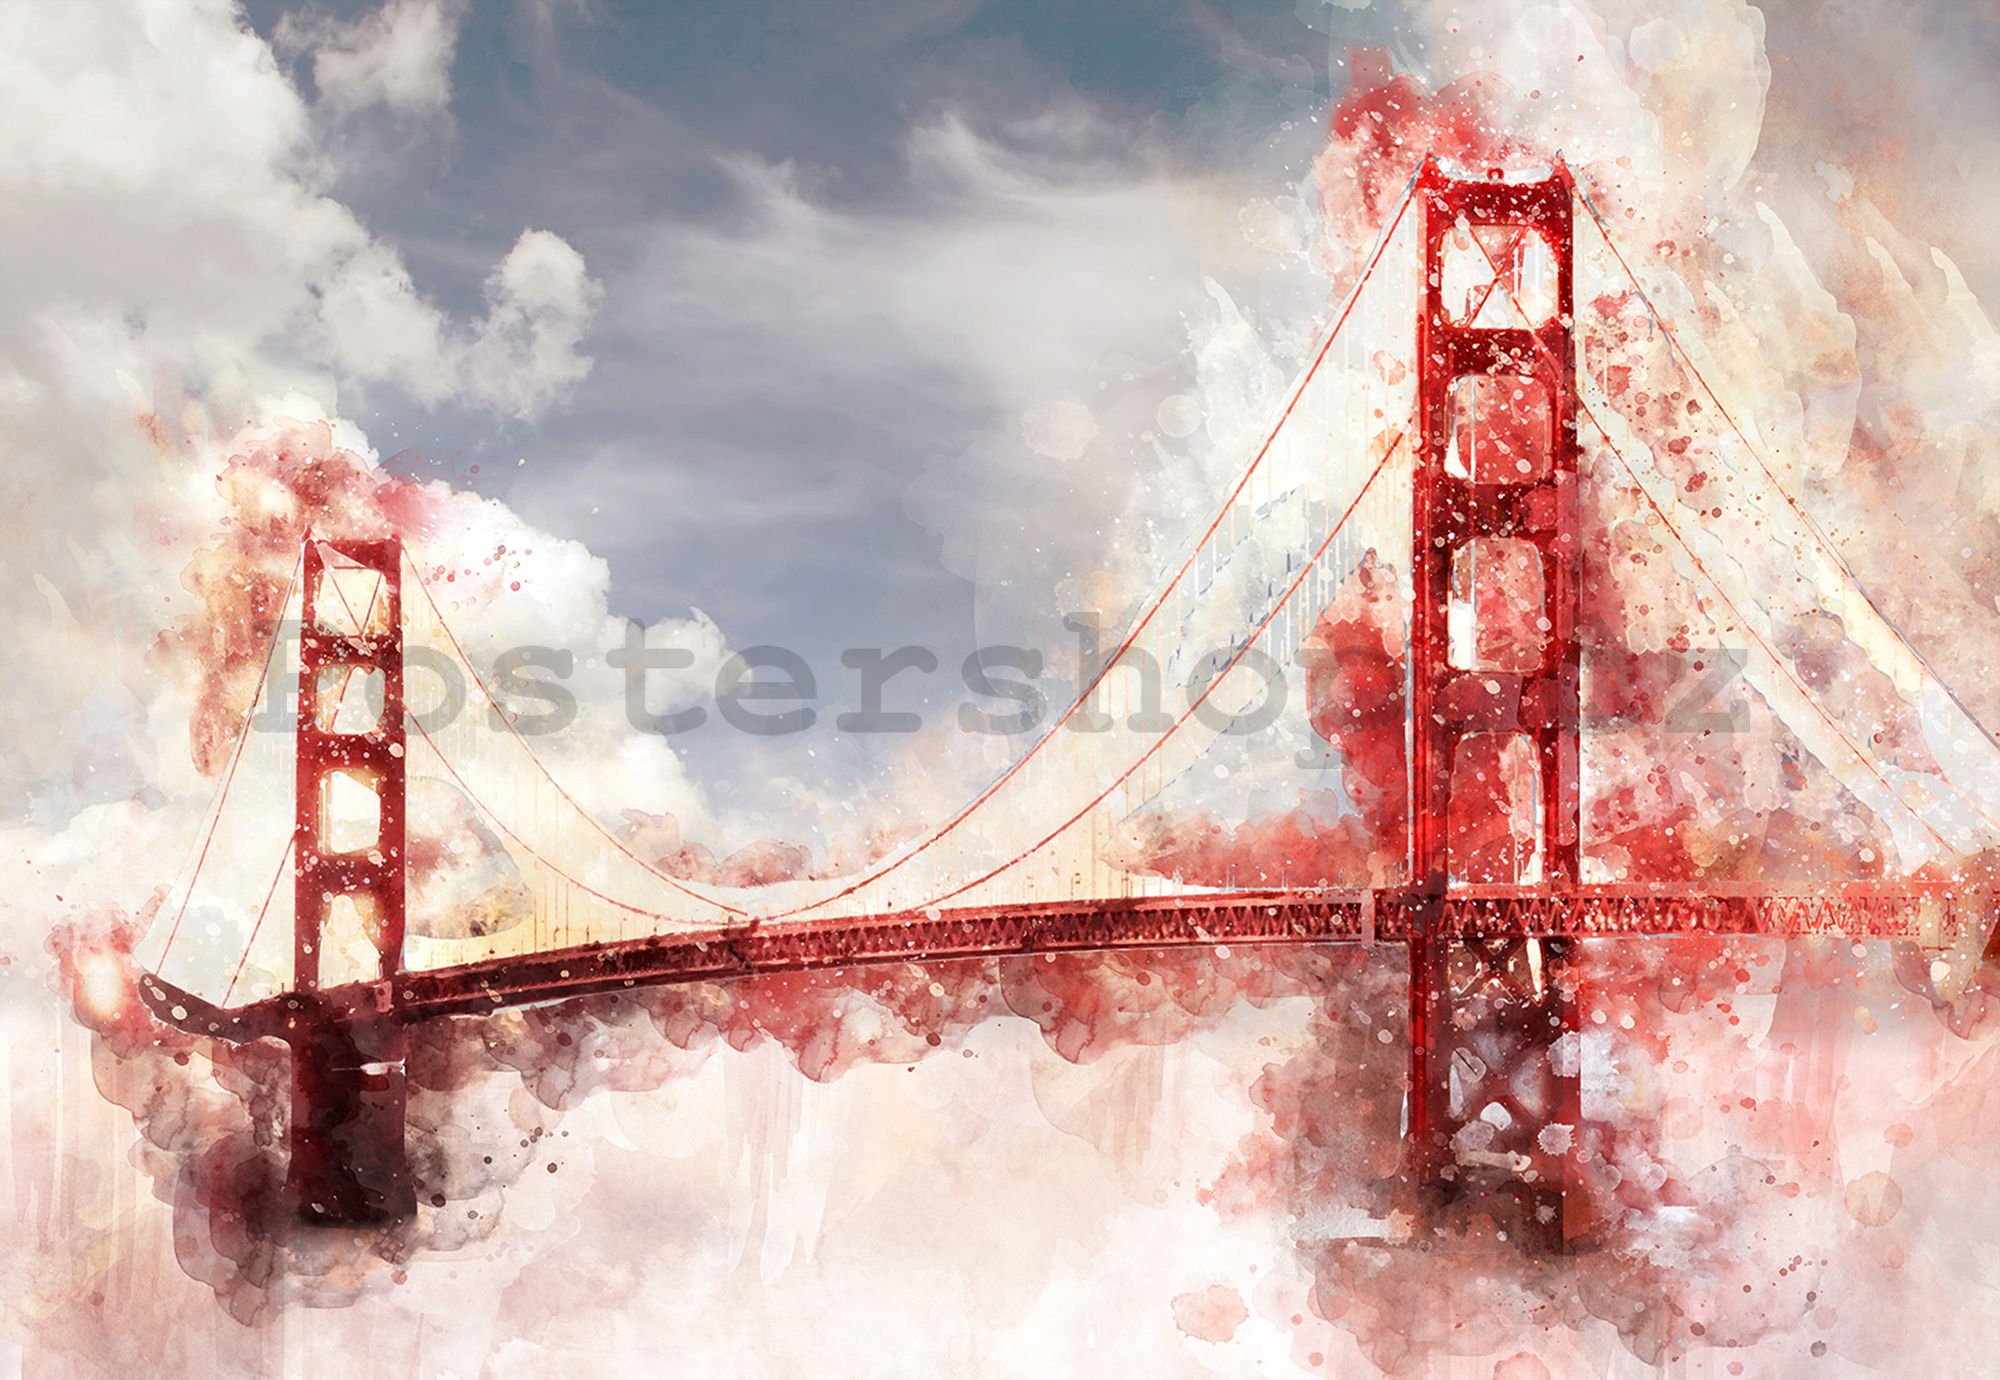 Fototapeta: Golden Gate Bridge (malovaný) - 254x368 cm